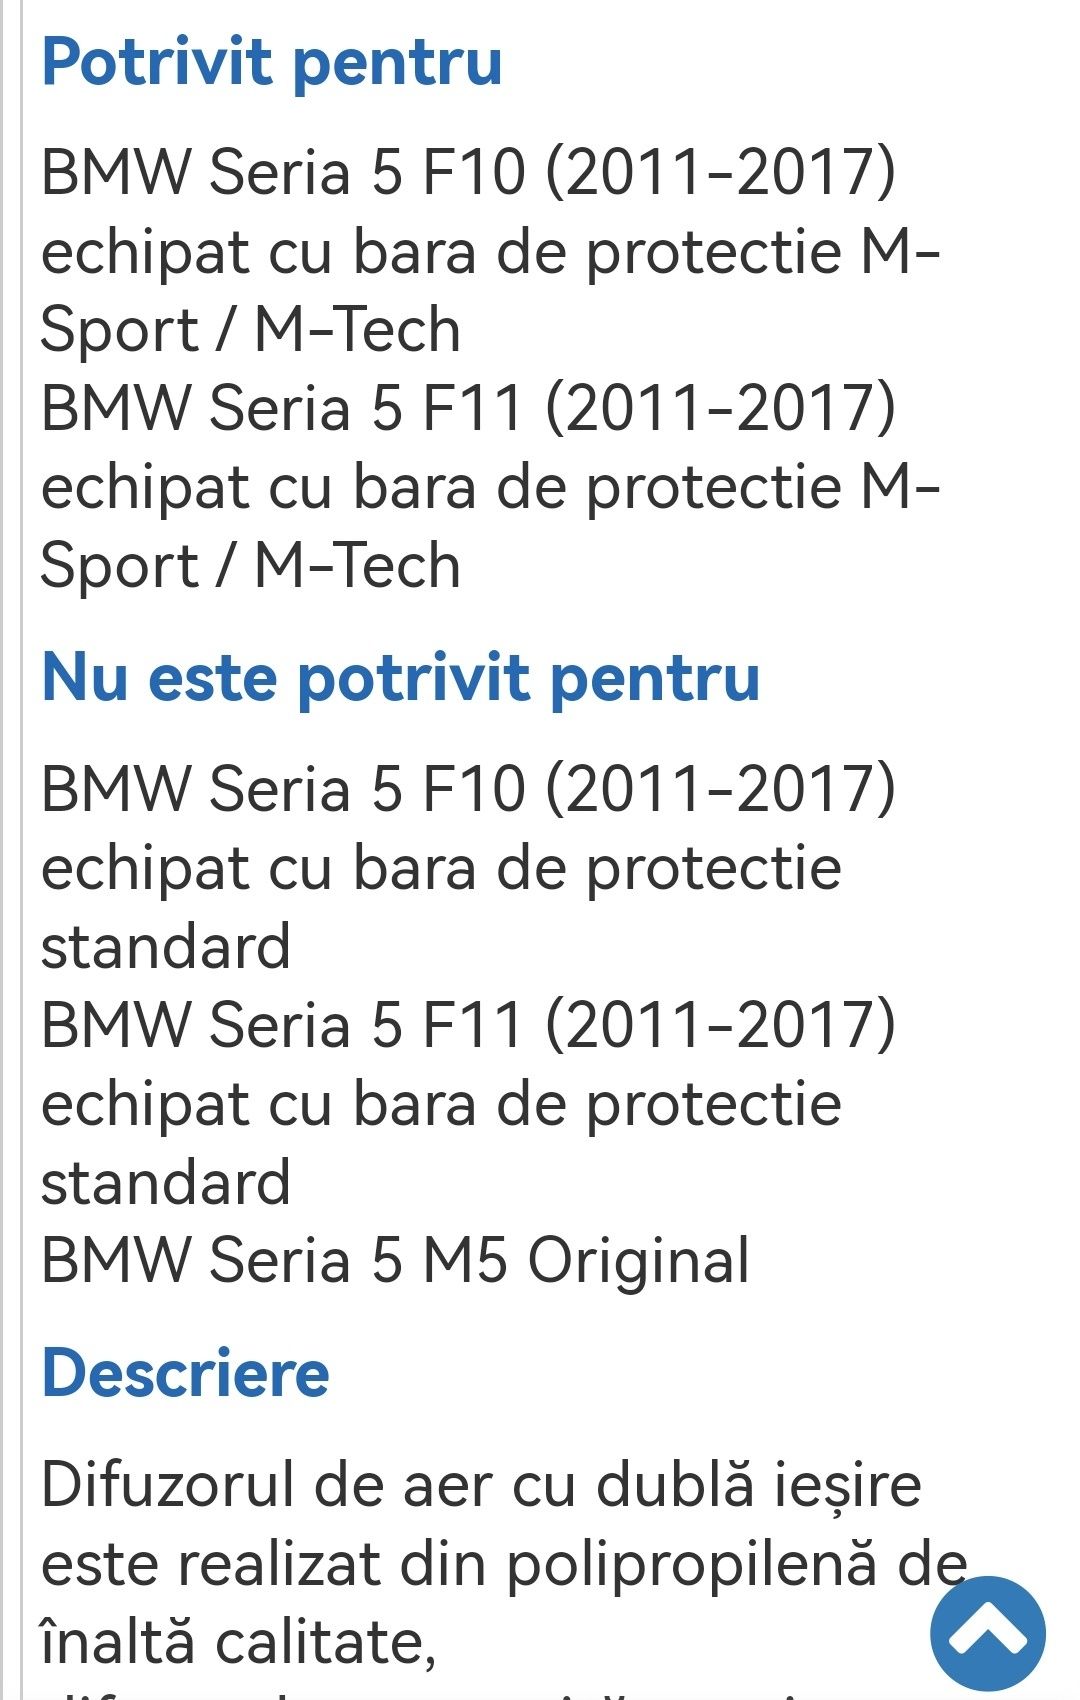 Difuzor BMW F10 M5